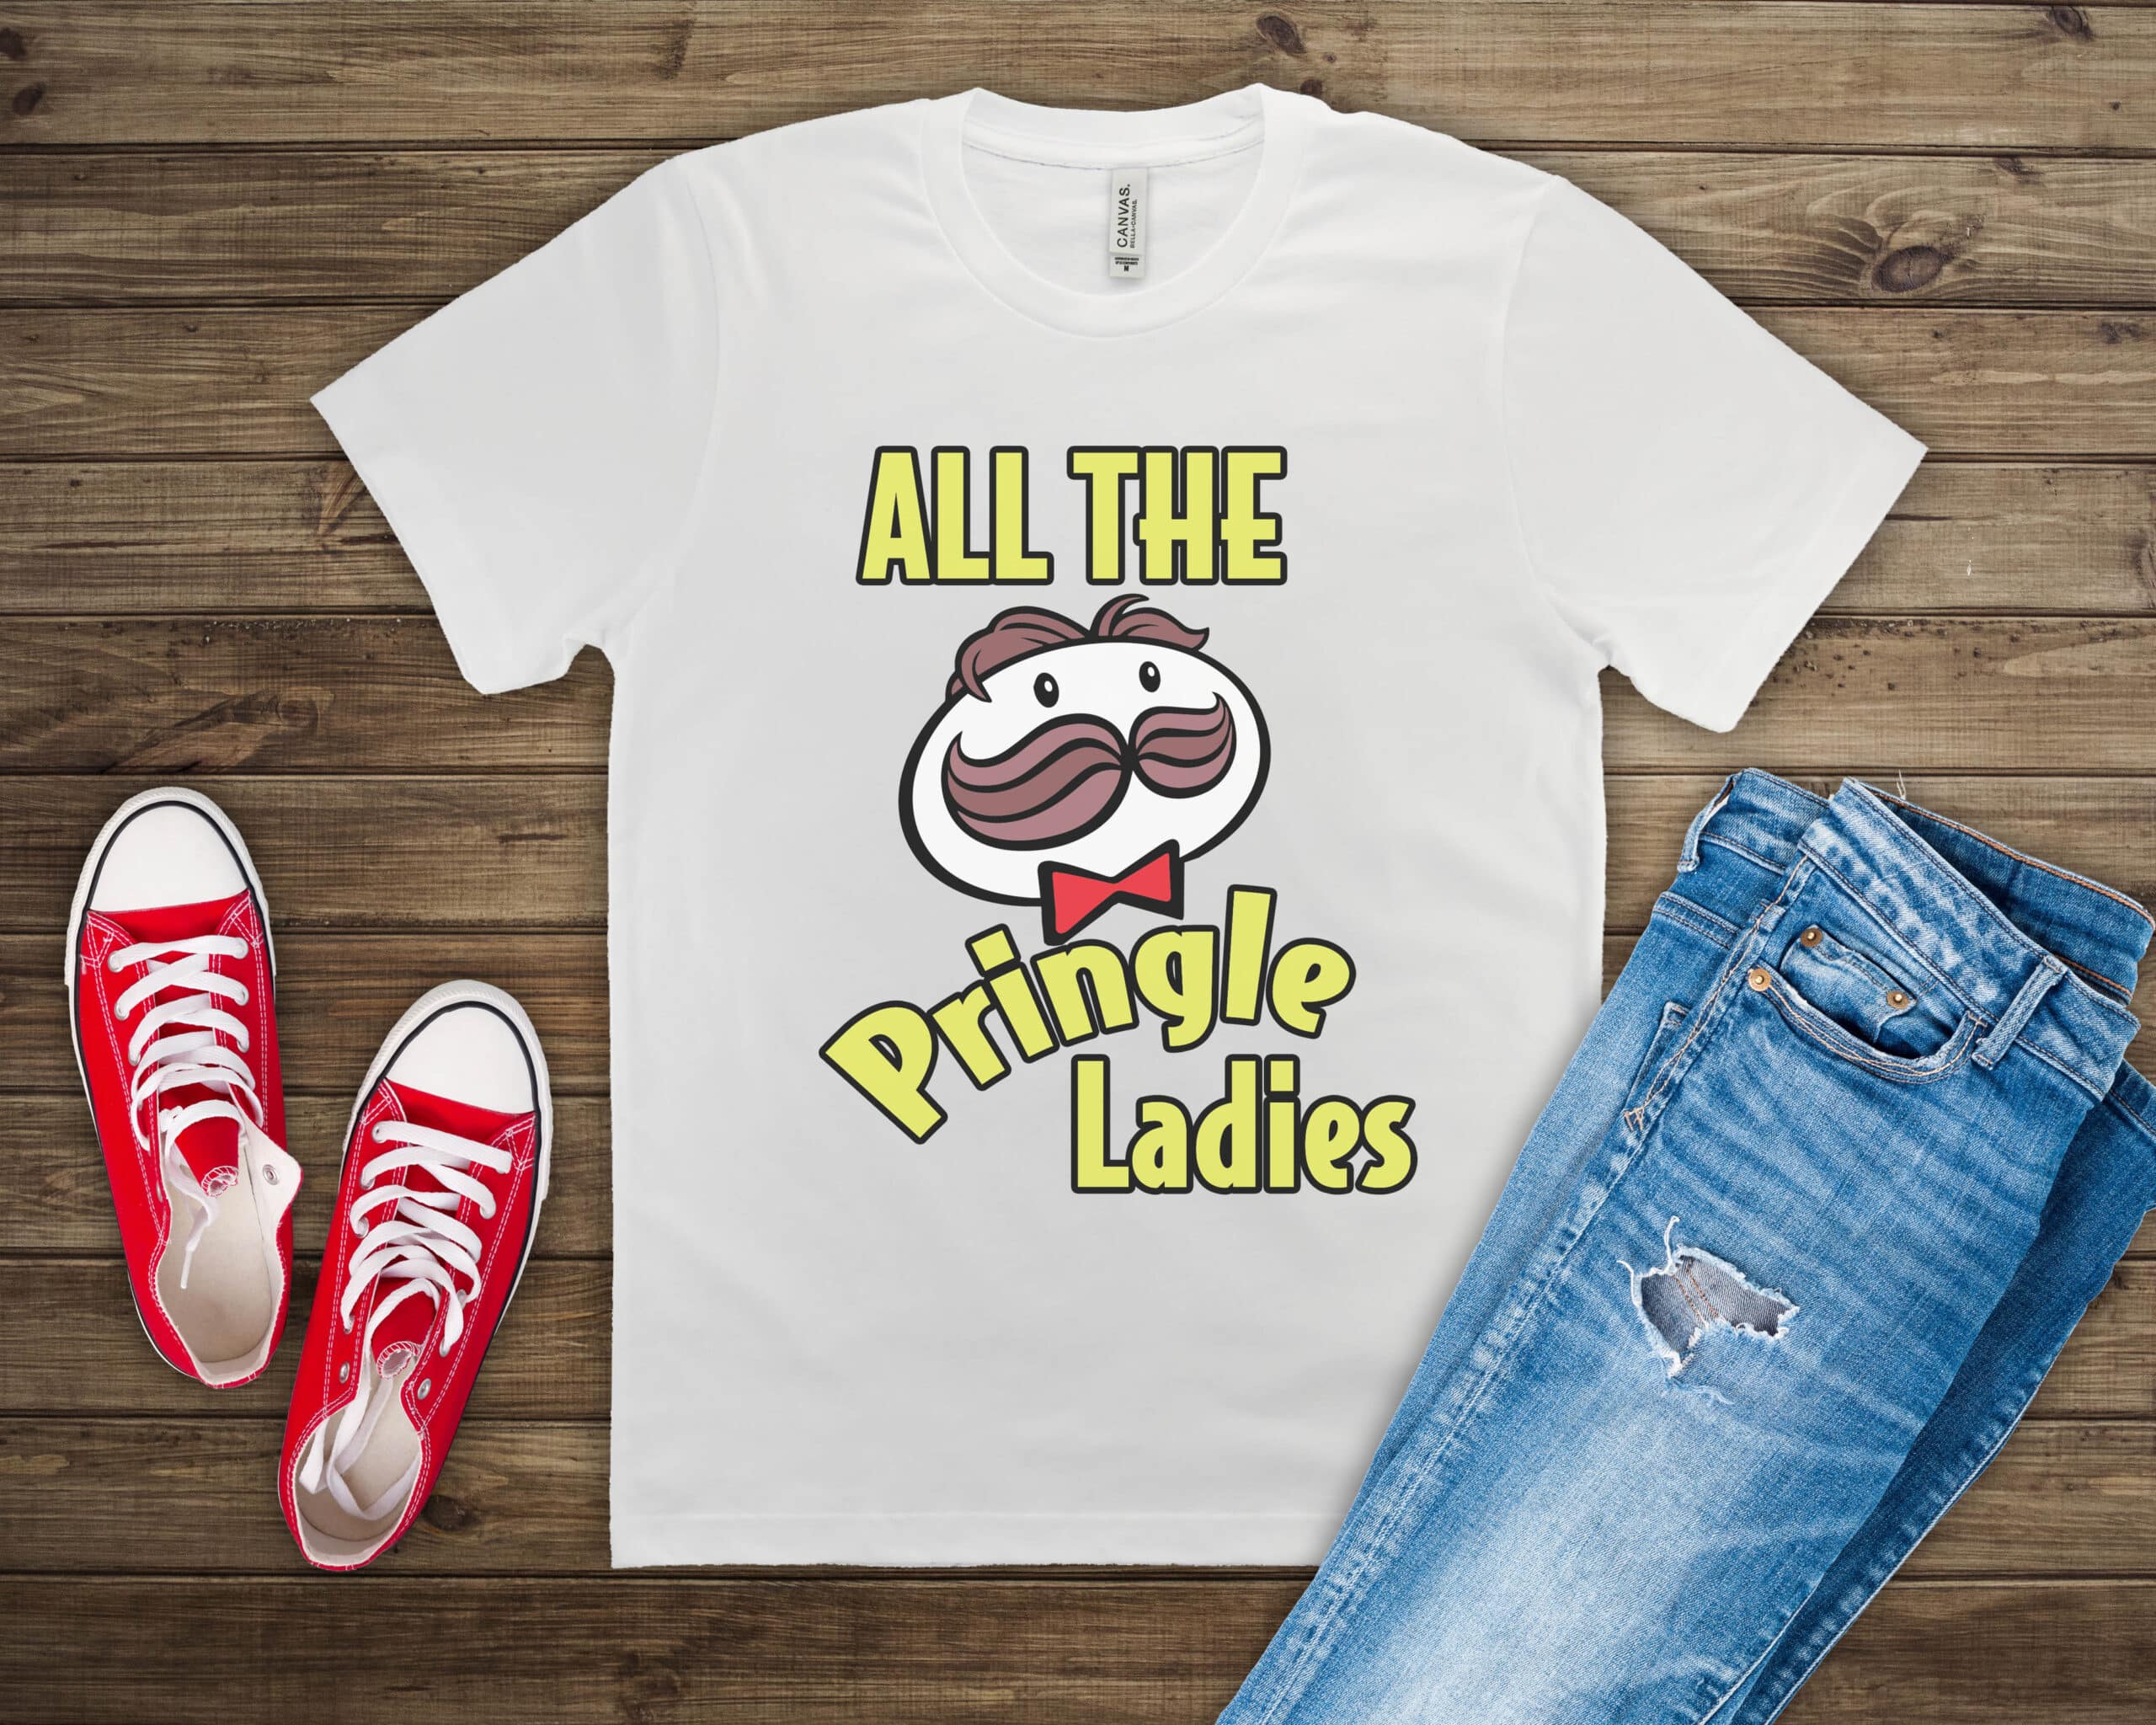 All the Pringle Ladies